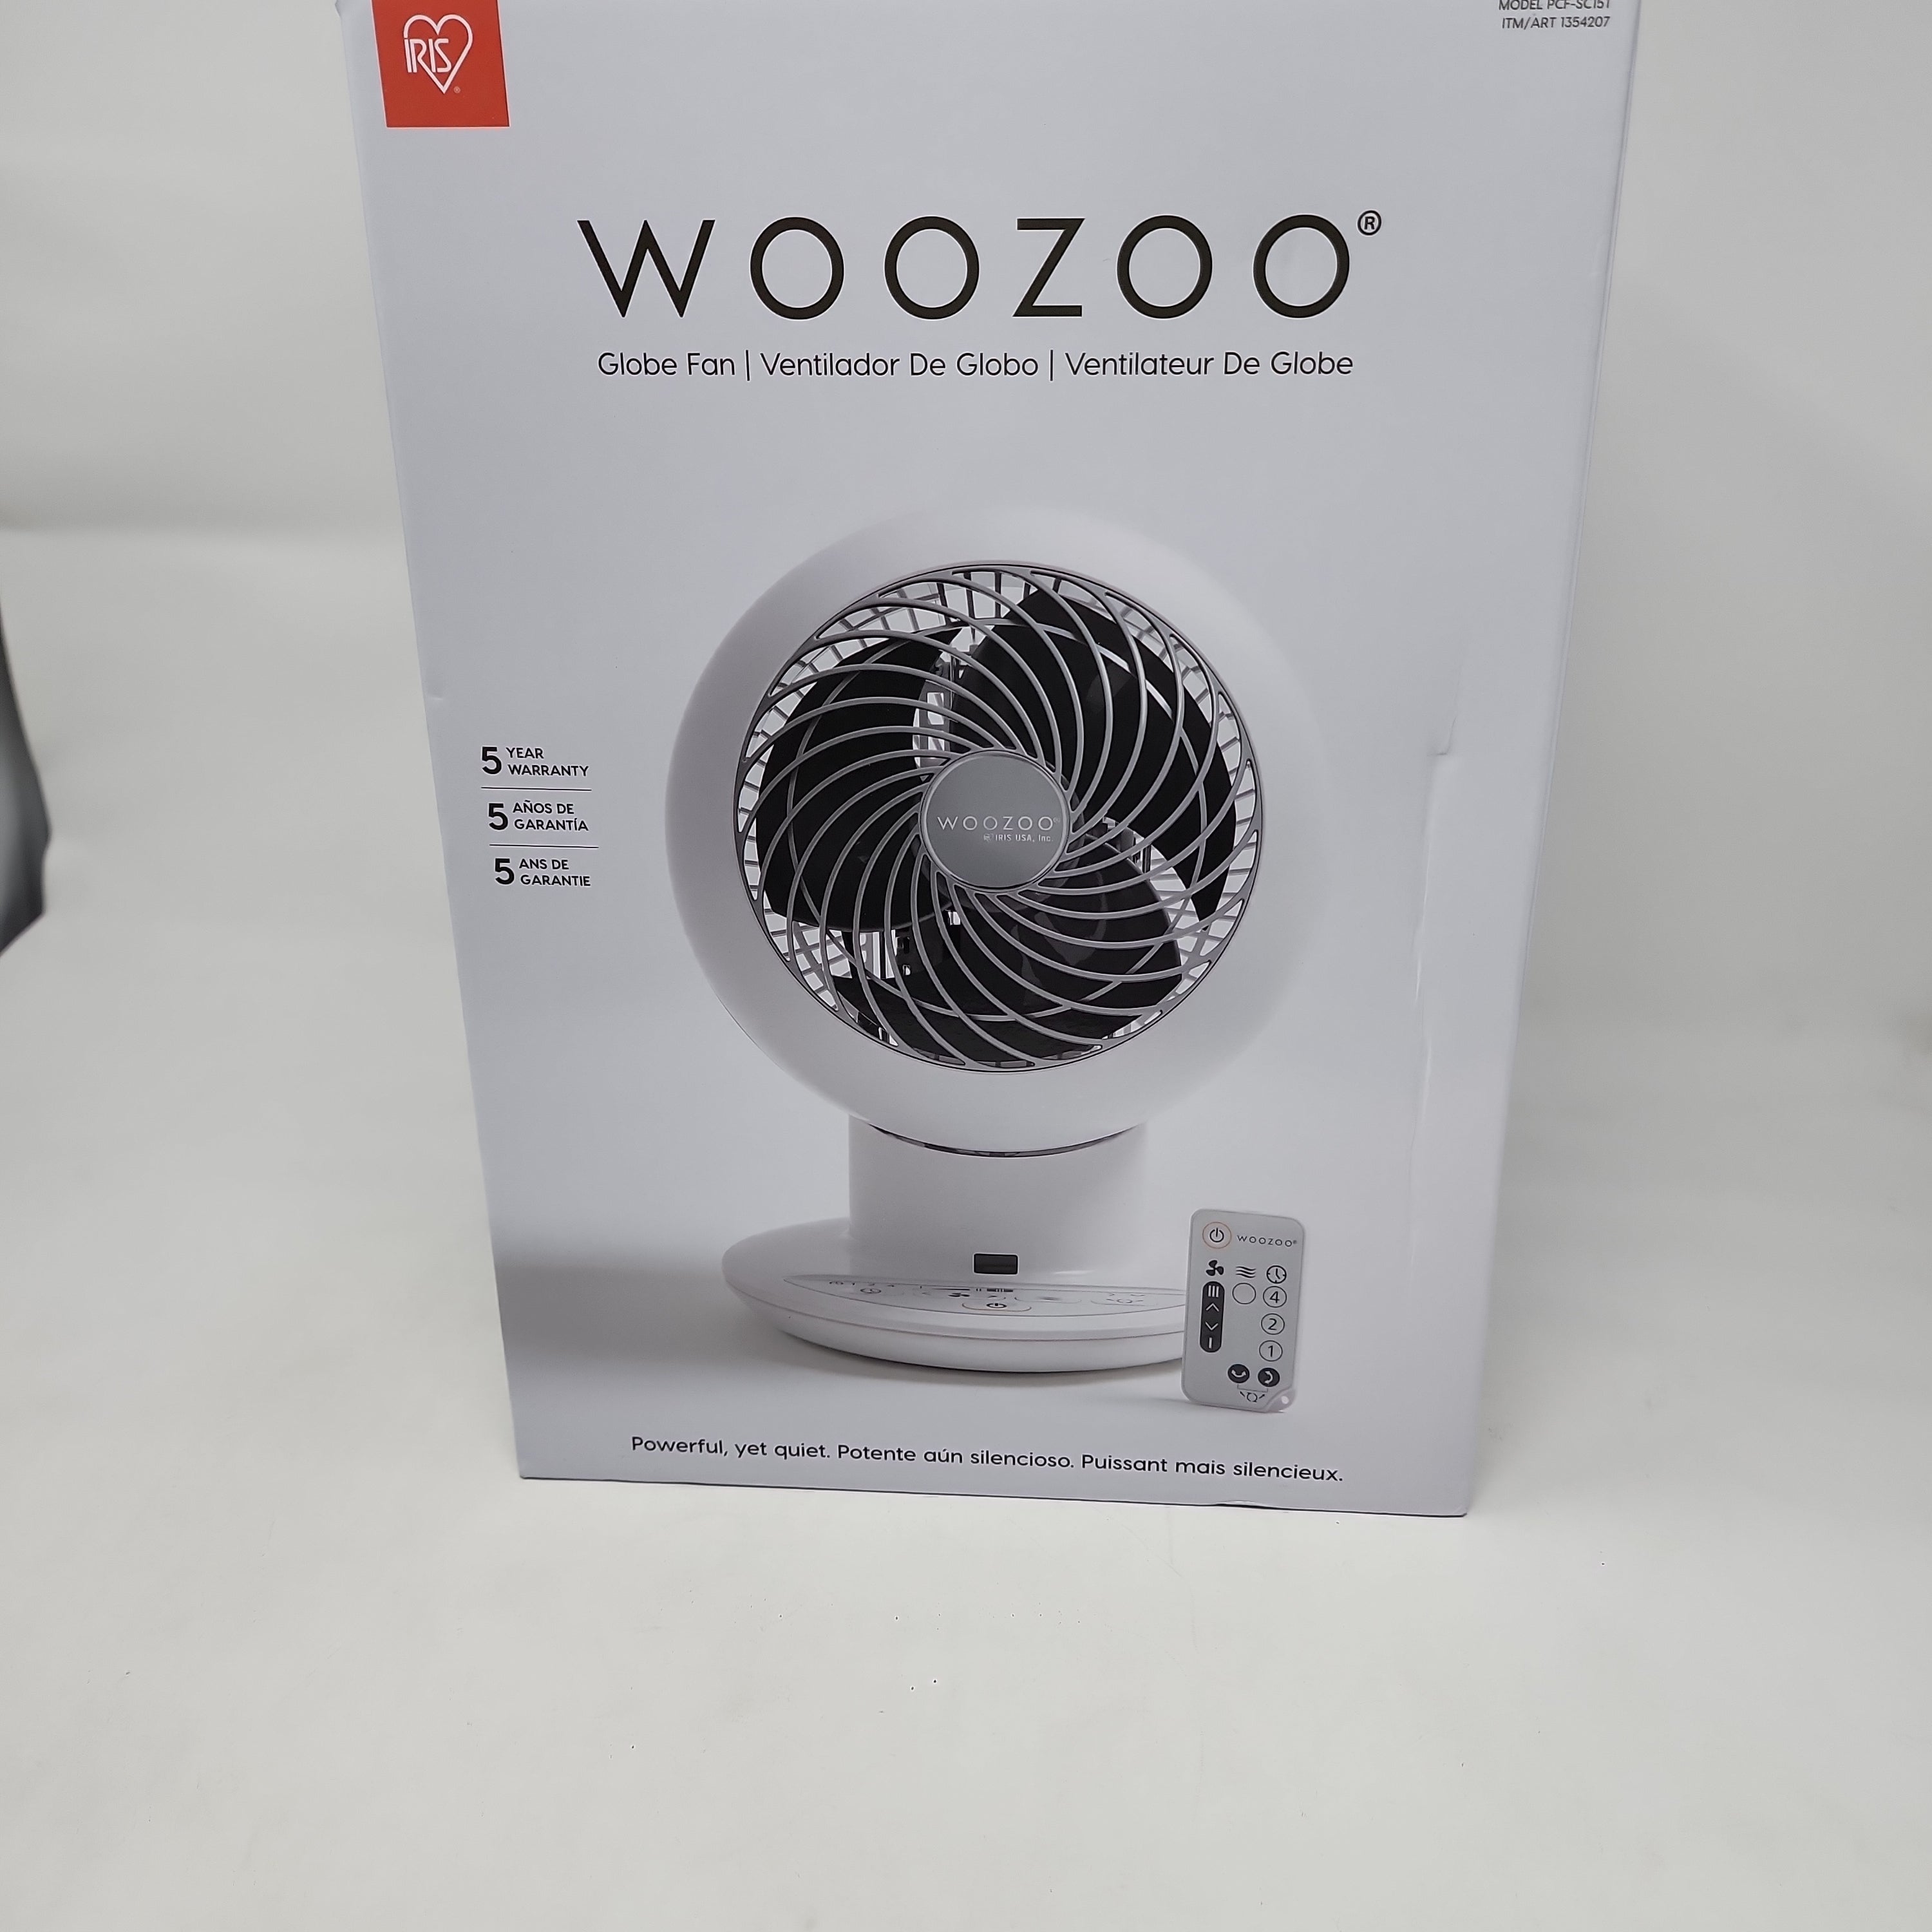 Woozoo 5 Speed Oscillating Air Circulator with Remote